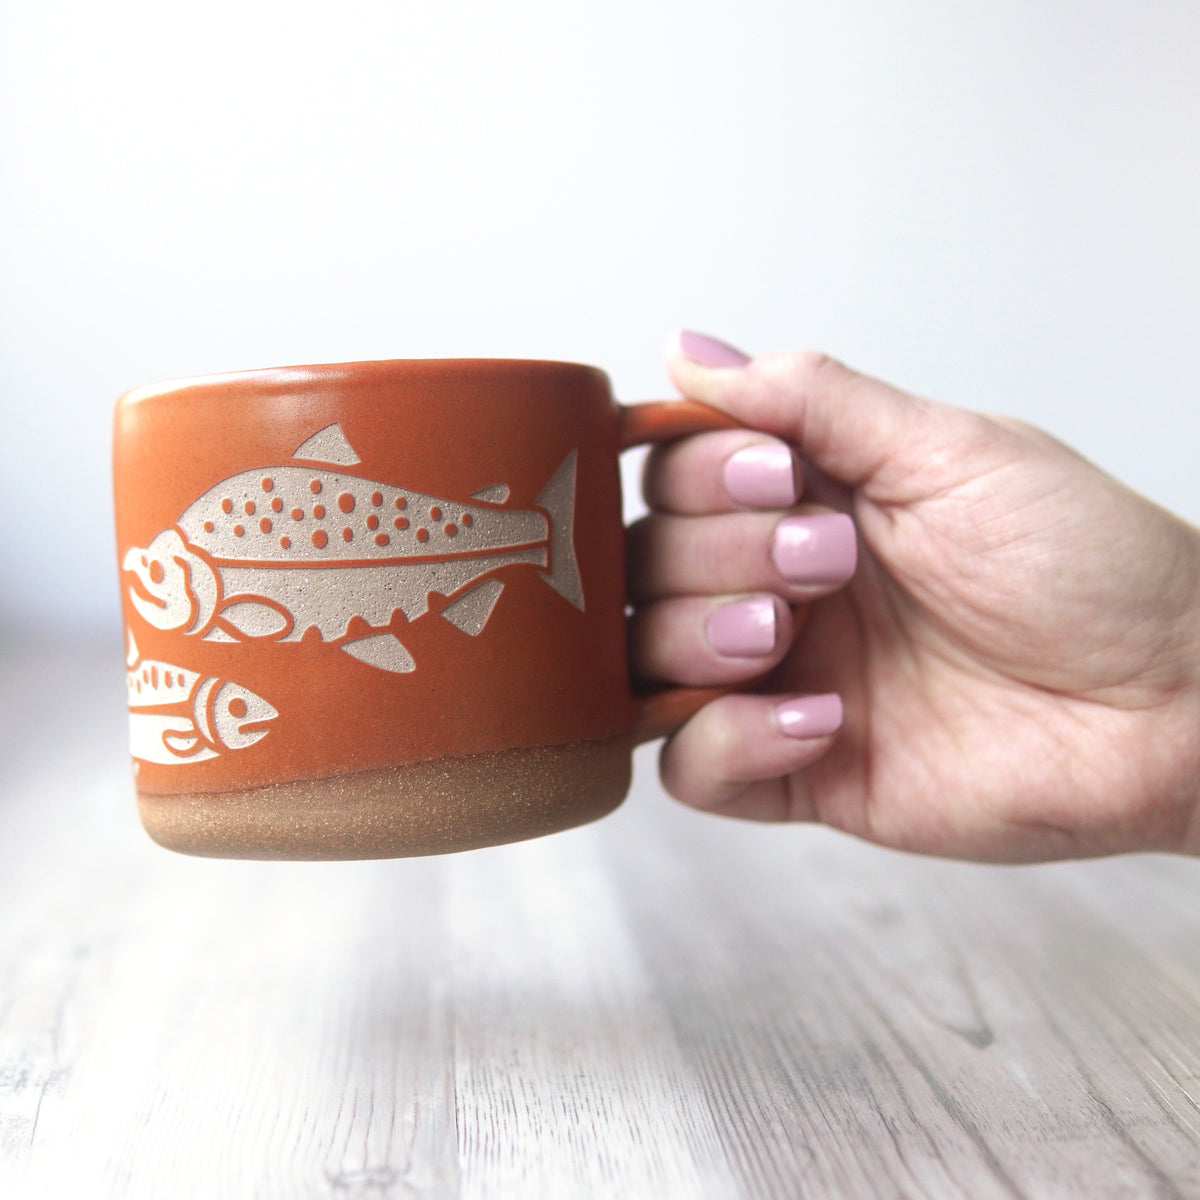 Rise & Grind Ceramic Mug – Salmon Sisters